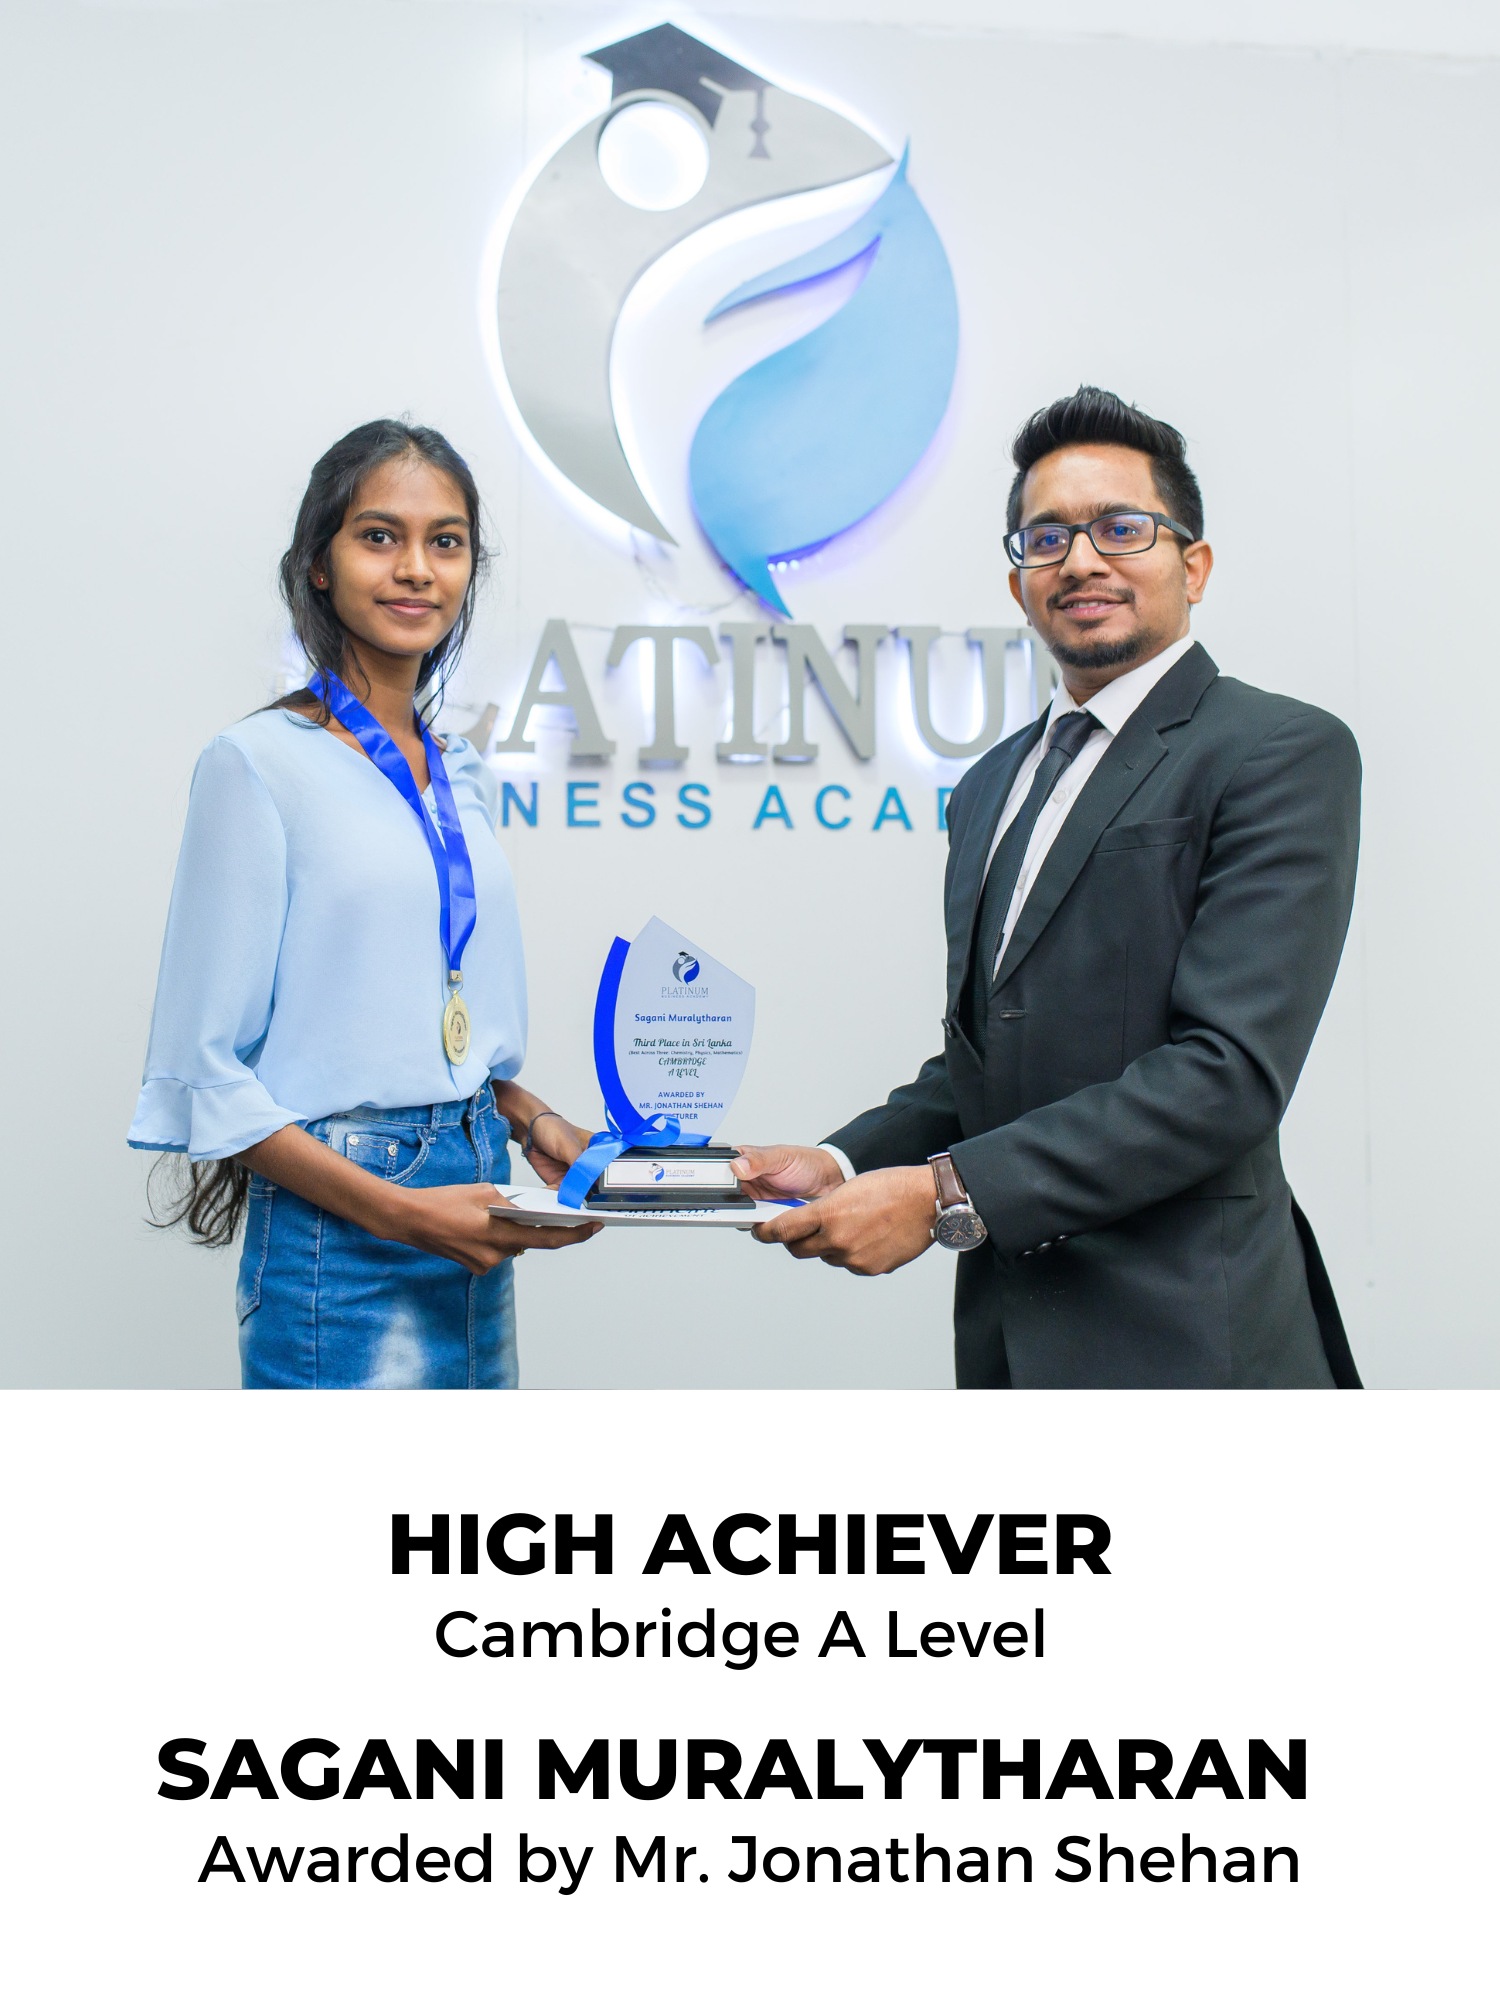 Cambridge AS Level High Achiever Winner: Sagani Muralytharan
Lecturer: Mr. Jonathan Shehan